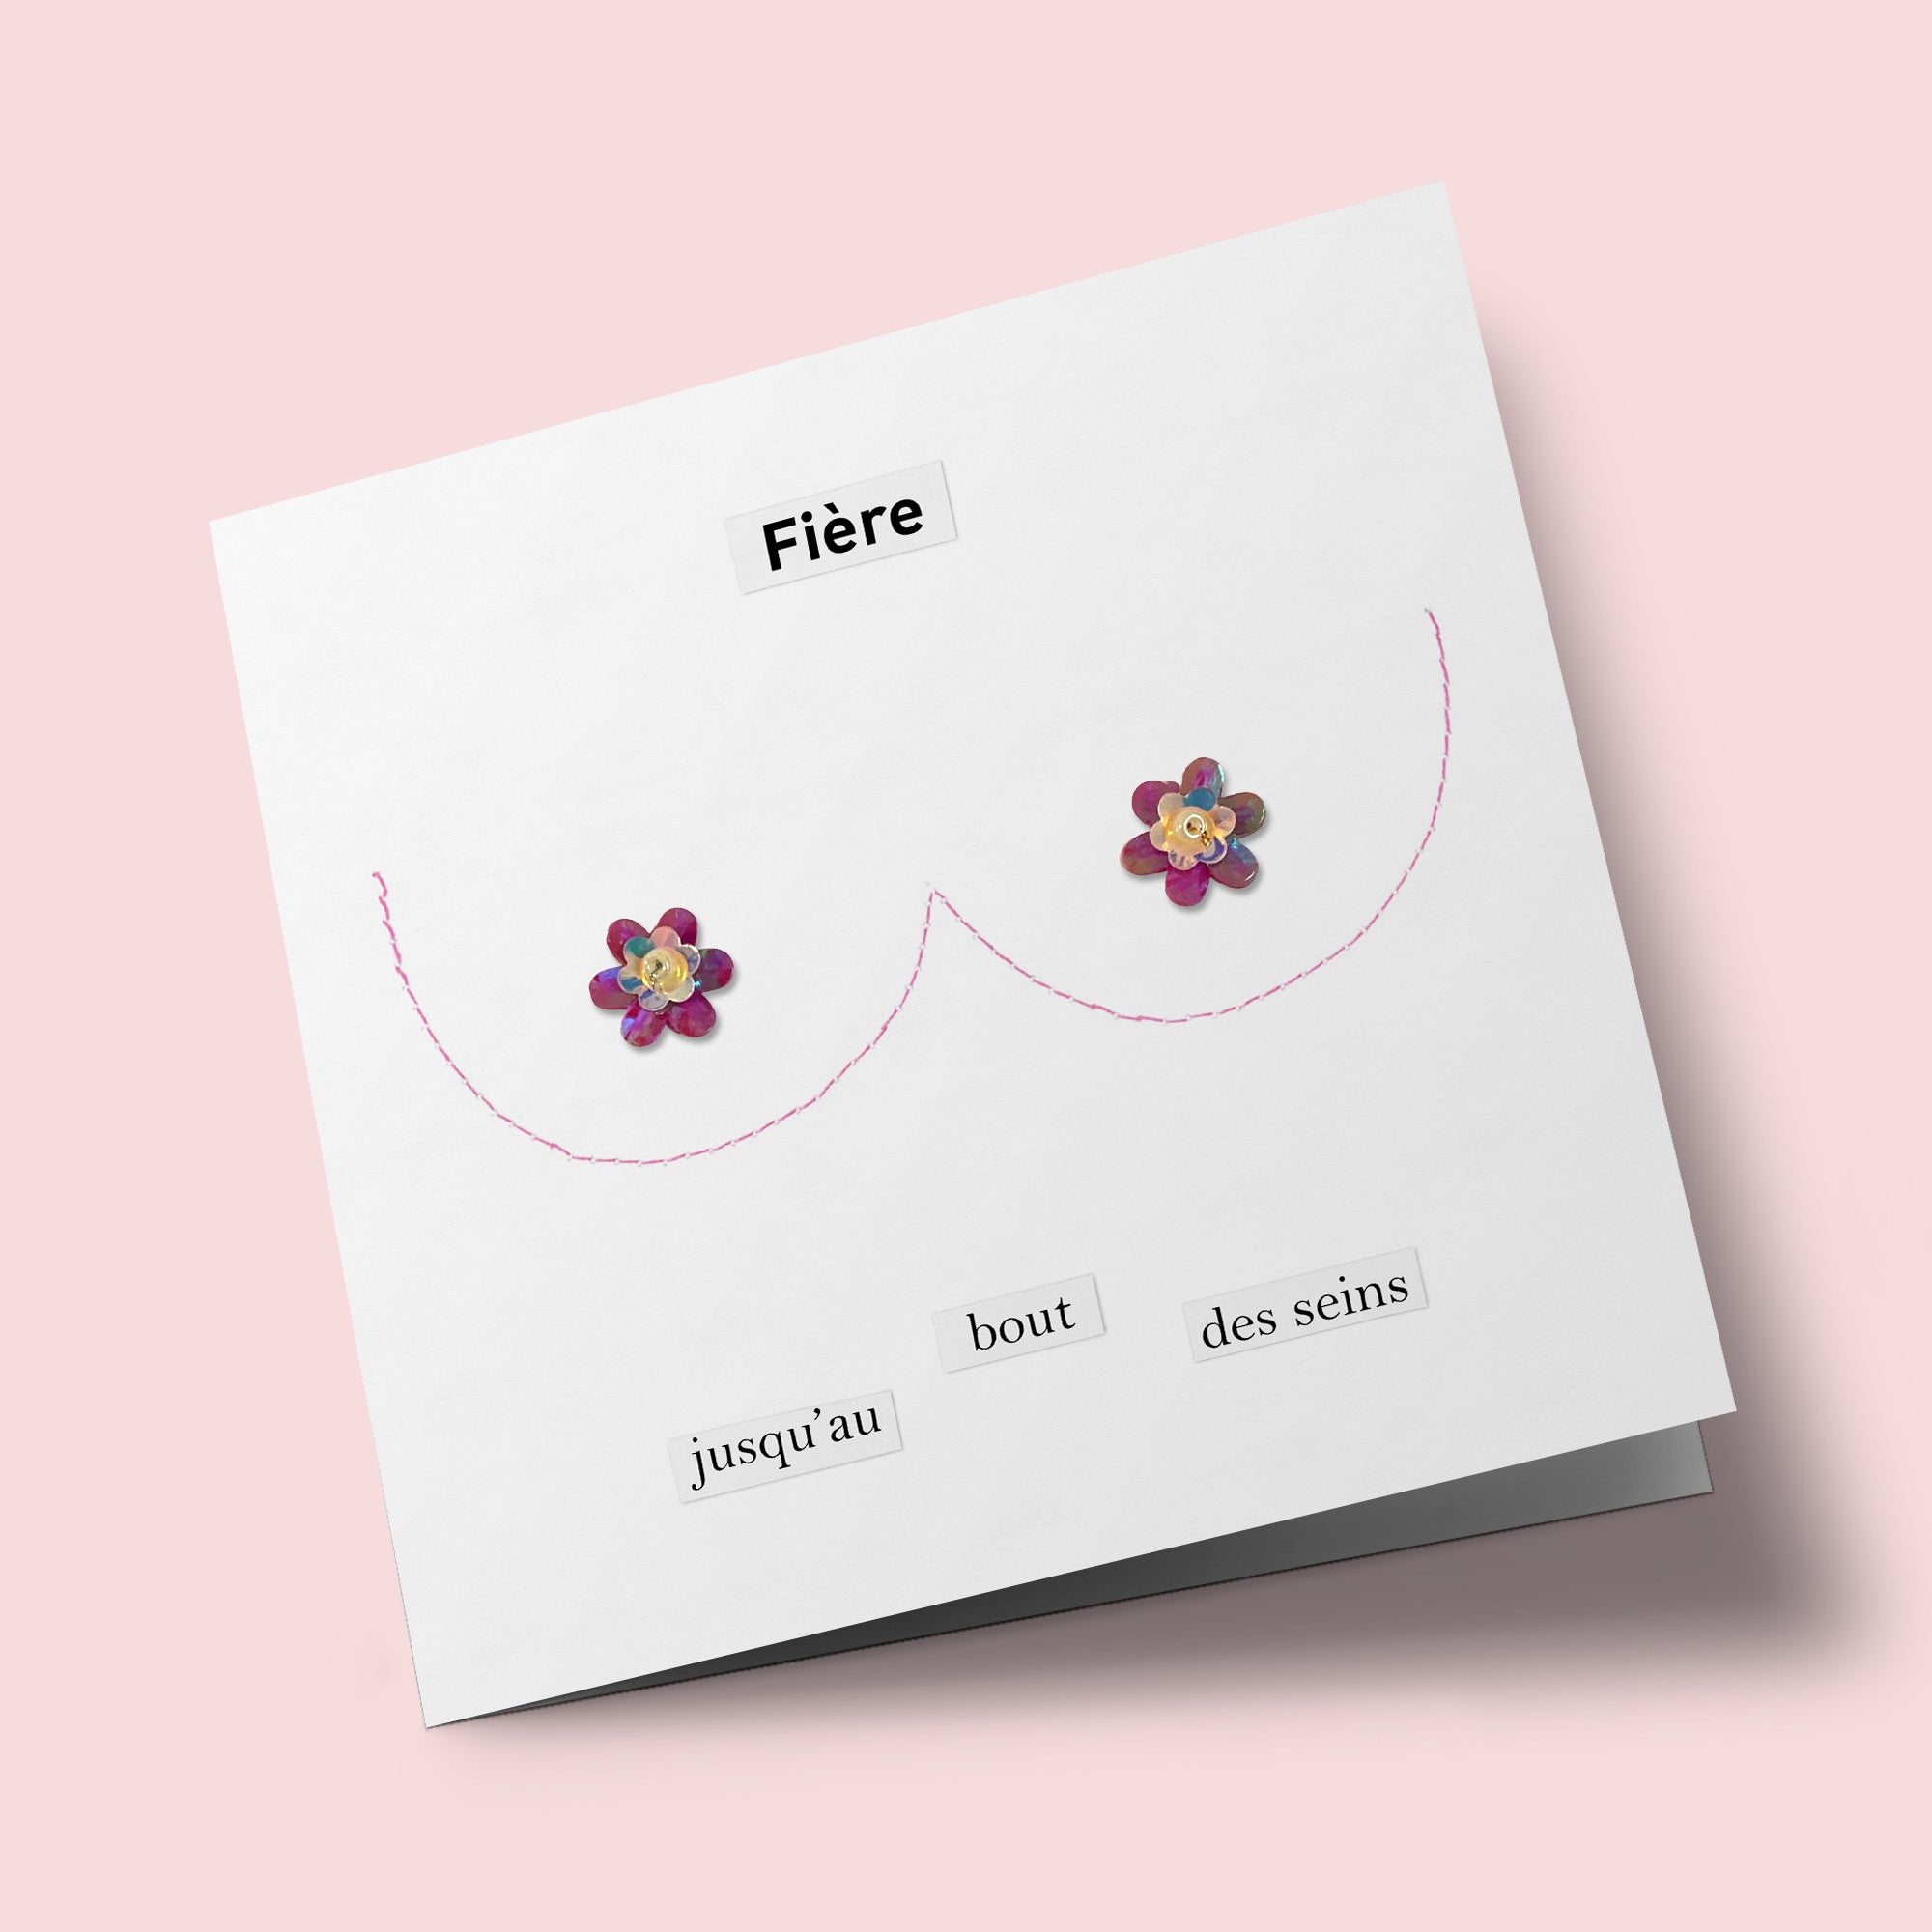 Rosebuds - "Fière" - embroidered card